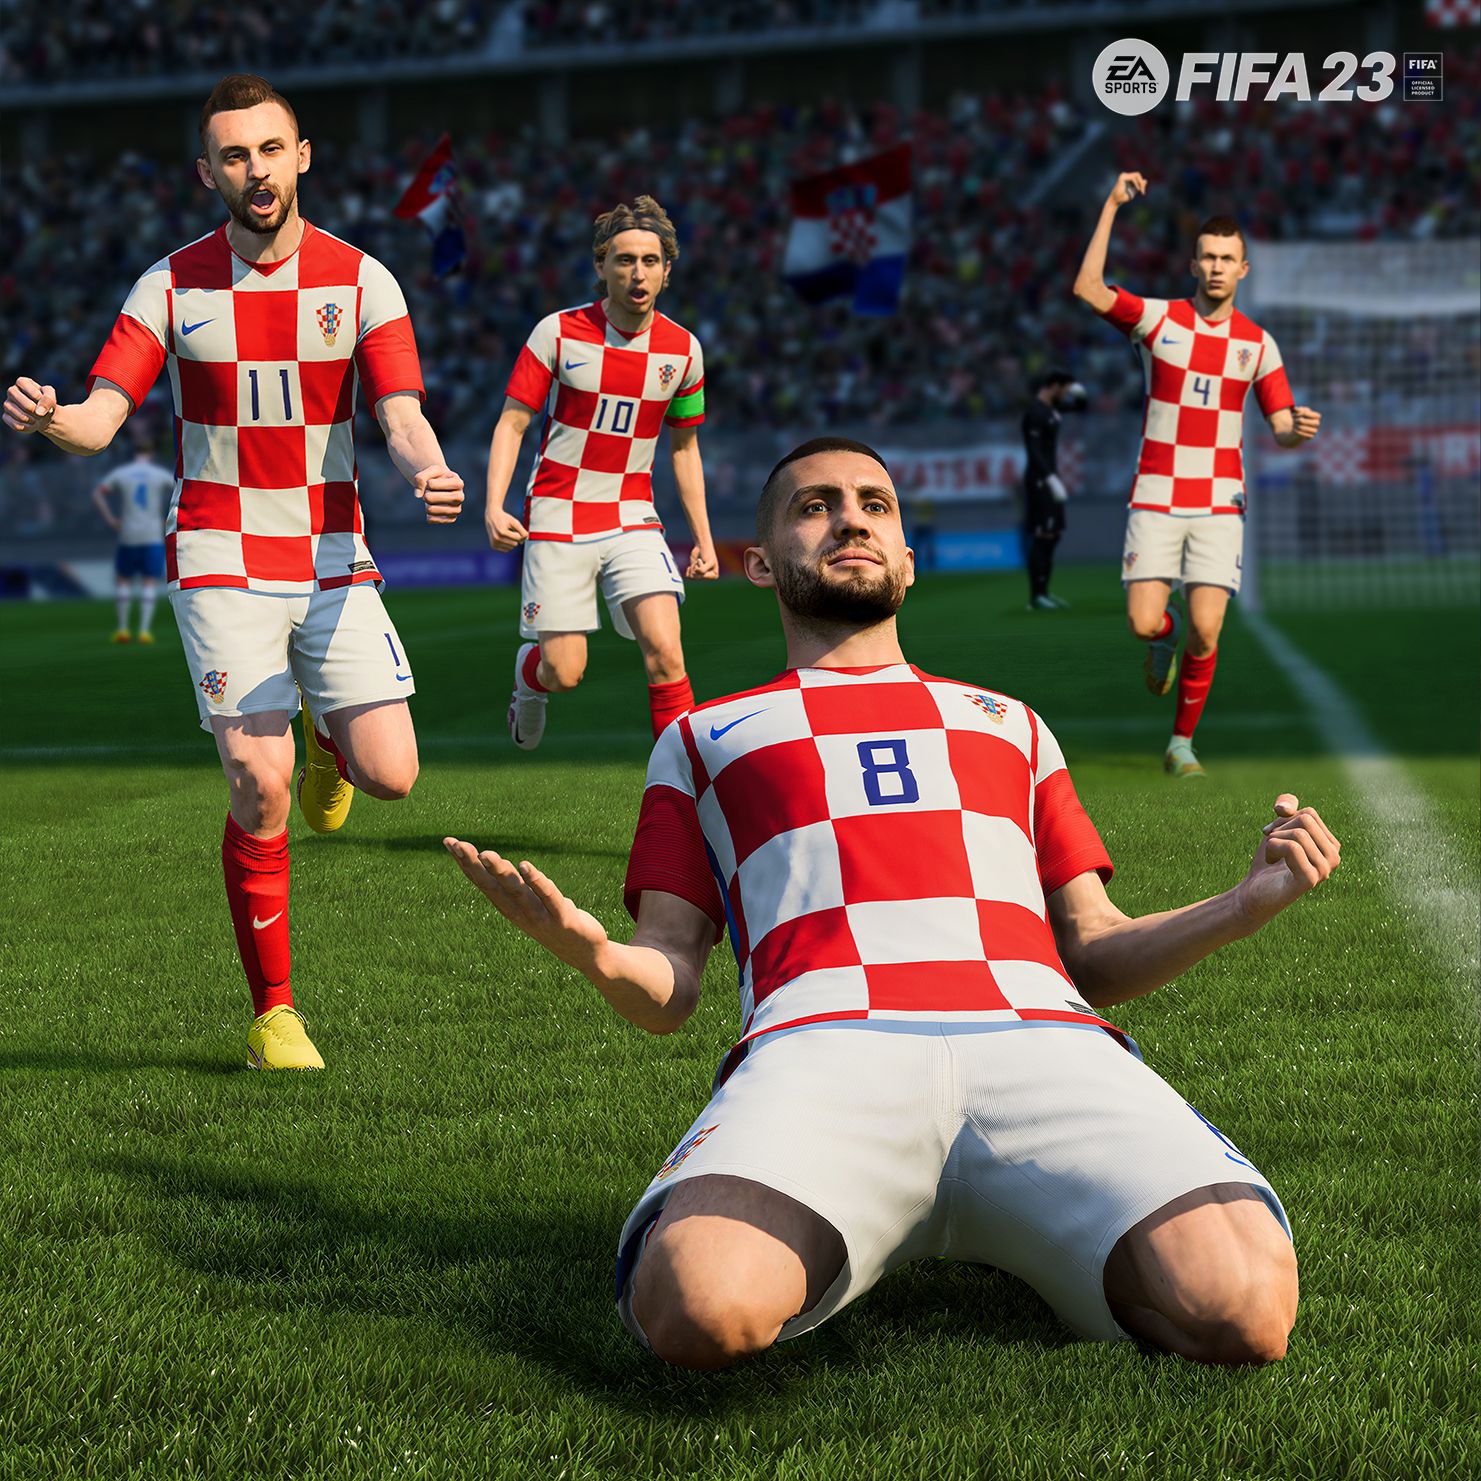 Croatian football team - FIFA 23 won't launch